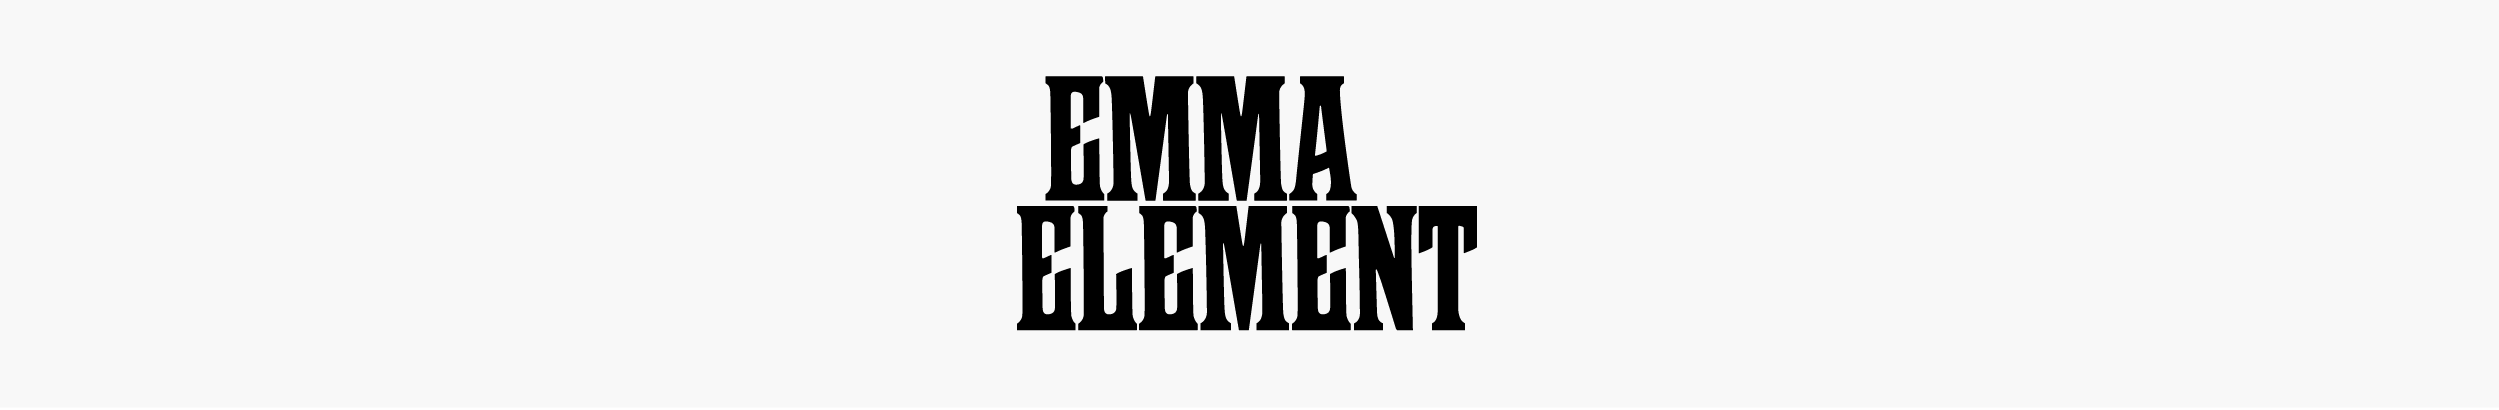 Emma Element's profile banner